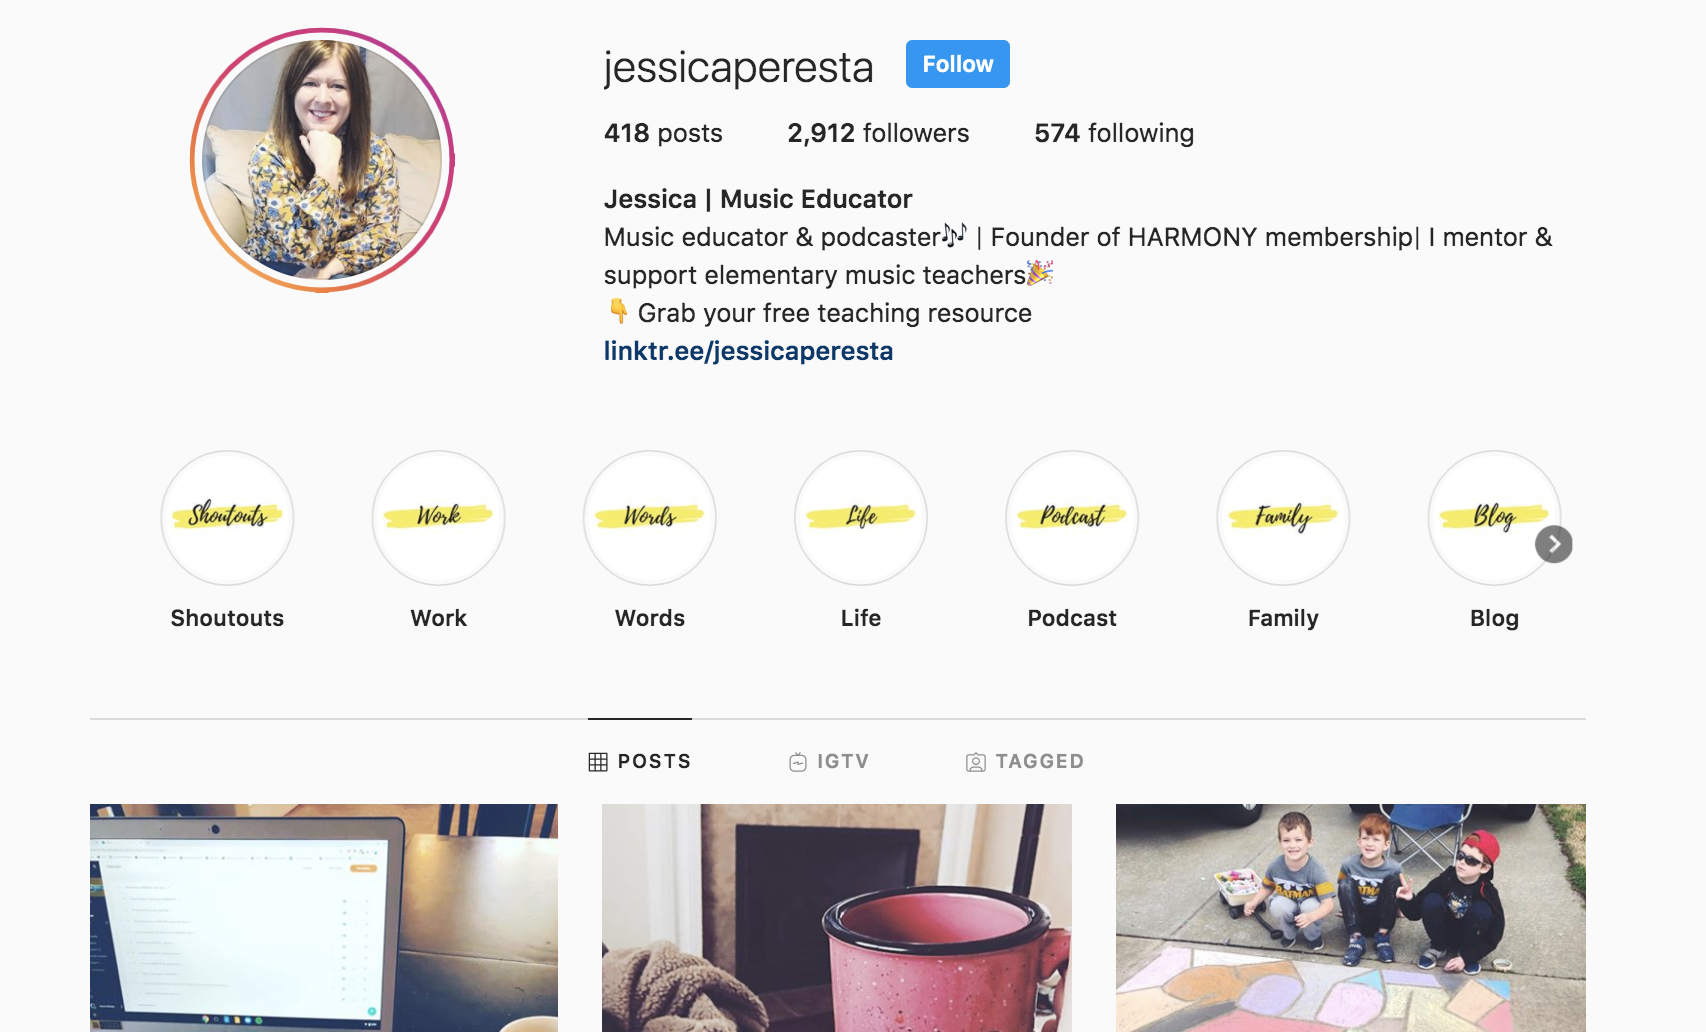 Jessica Peresta's instagram